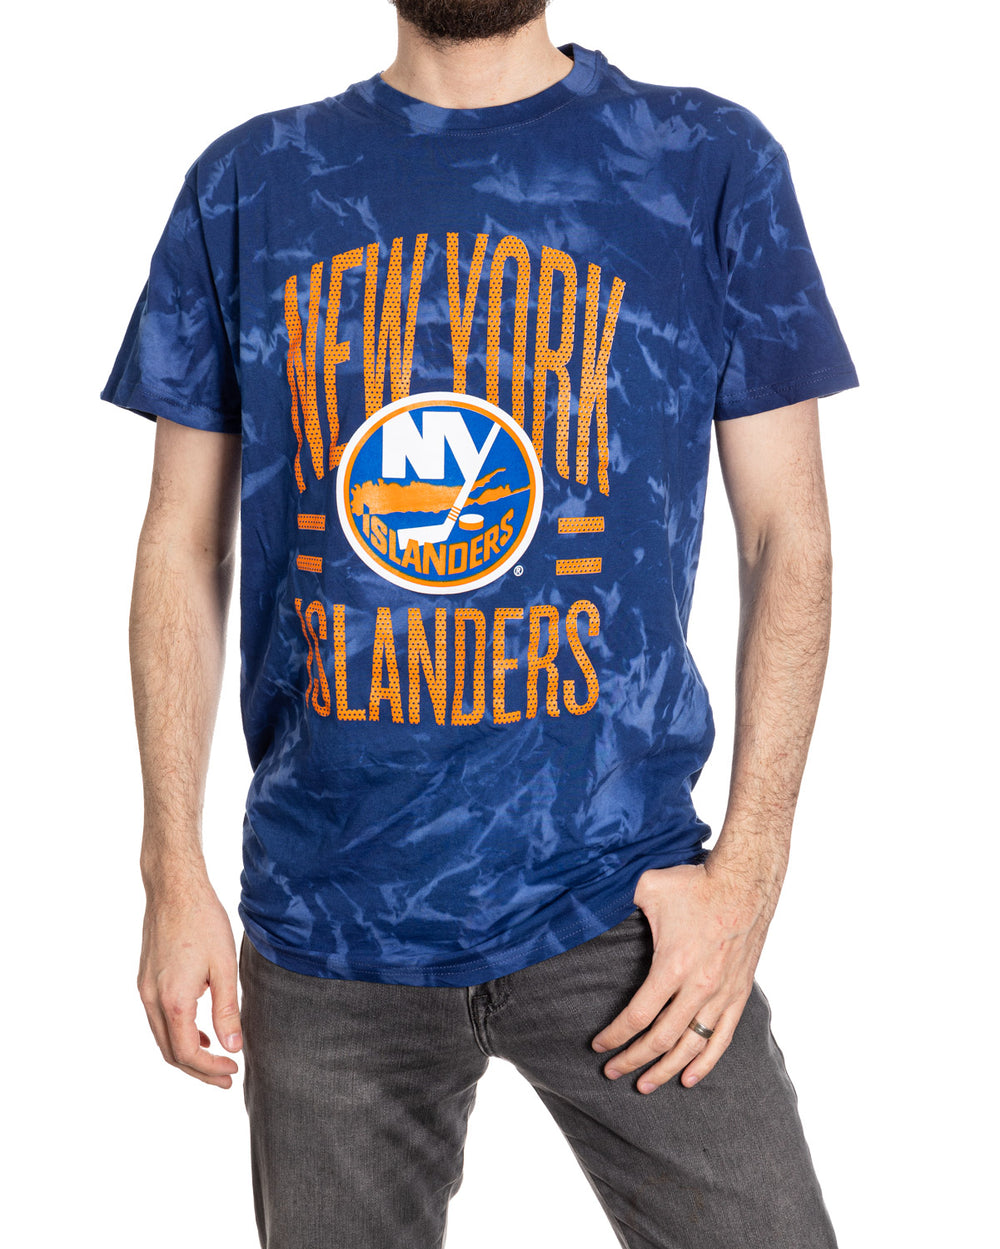 New York Islanders Premium Apparel and Leisurewear